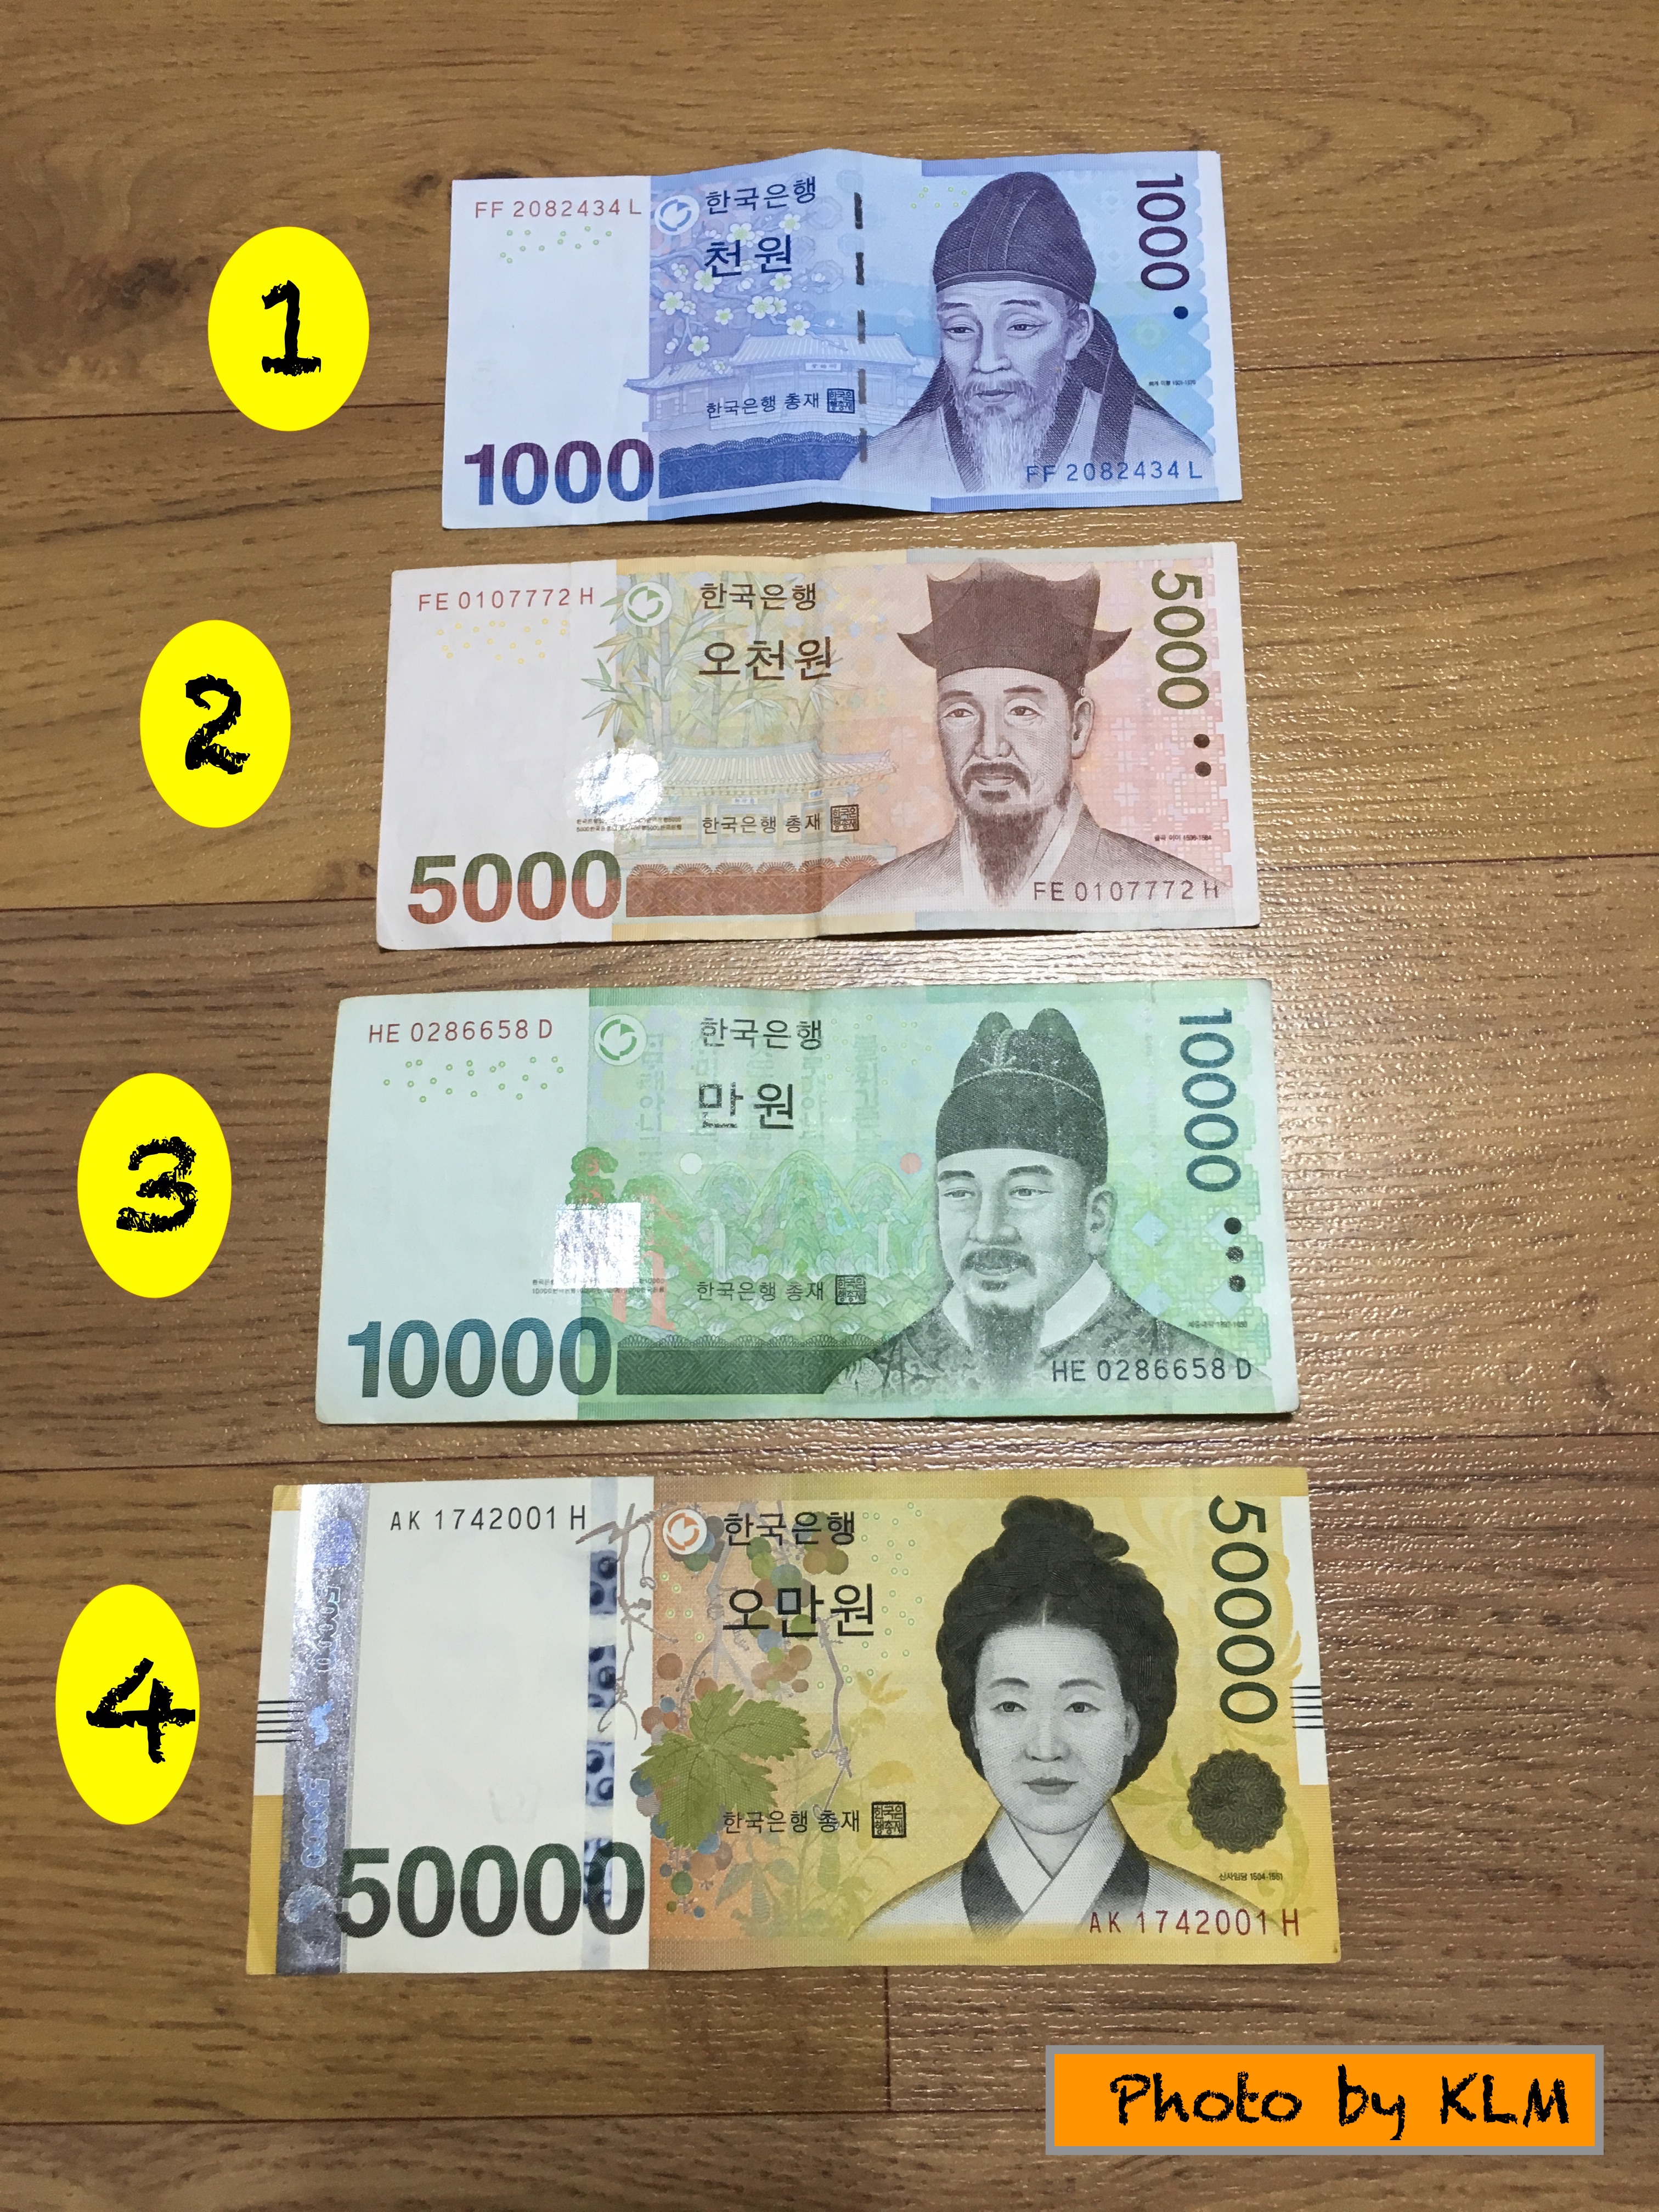 How much is $5 000 in Korean won?